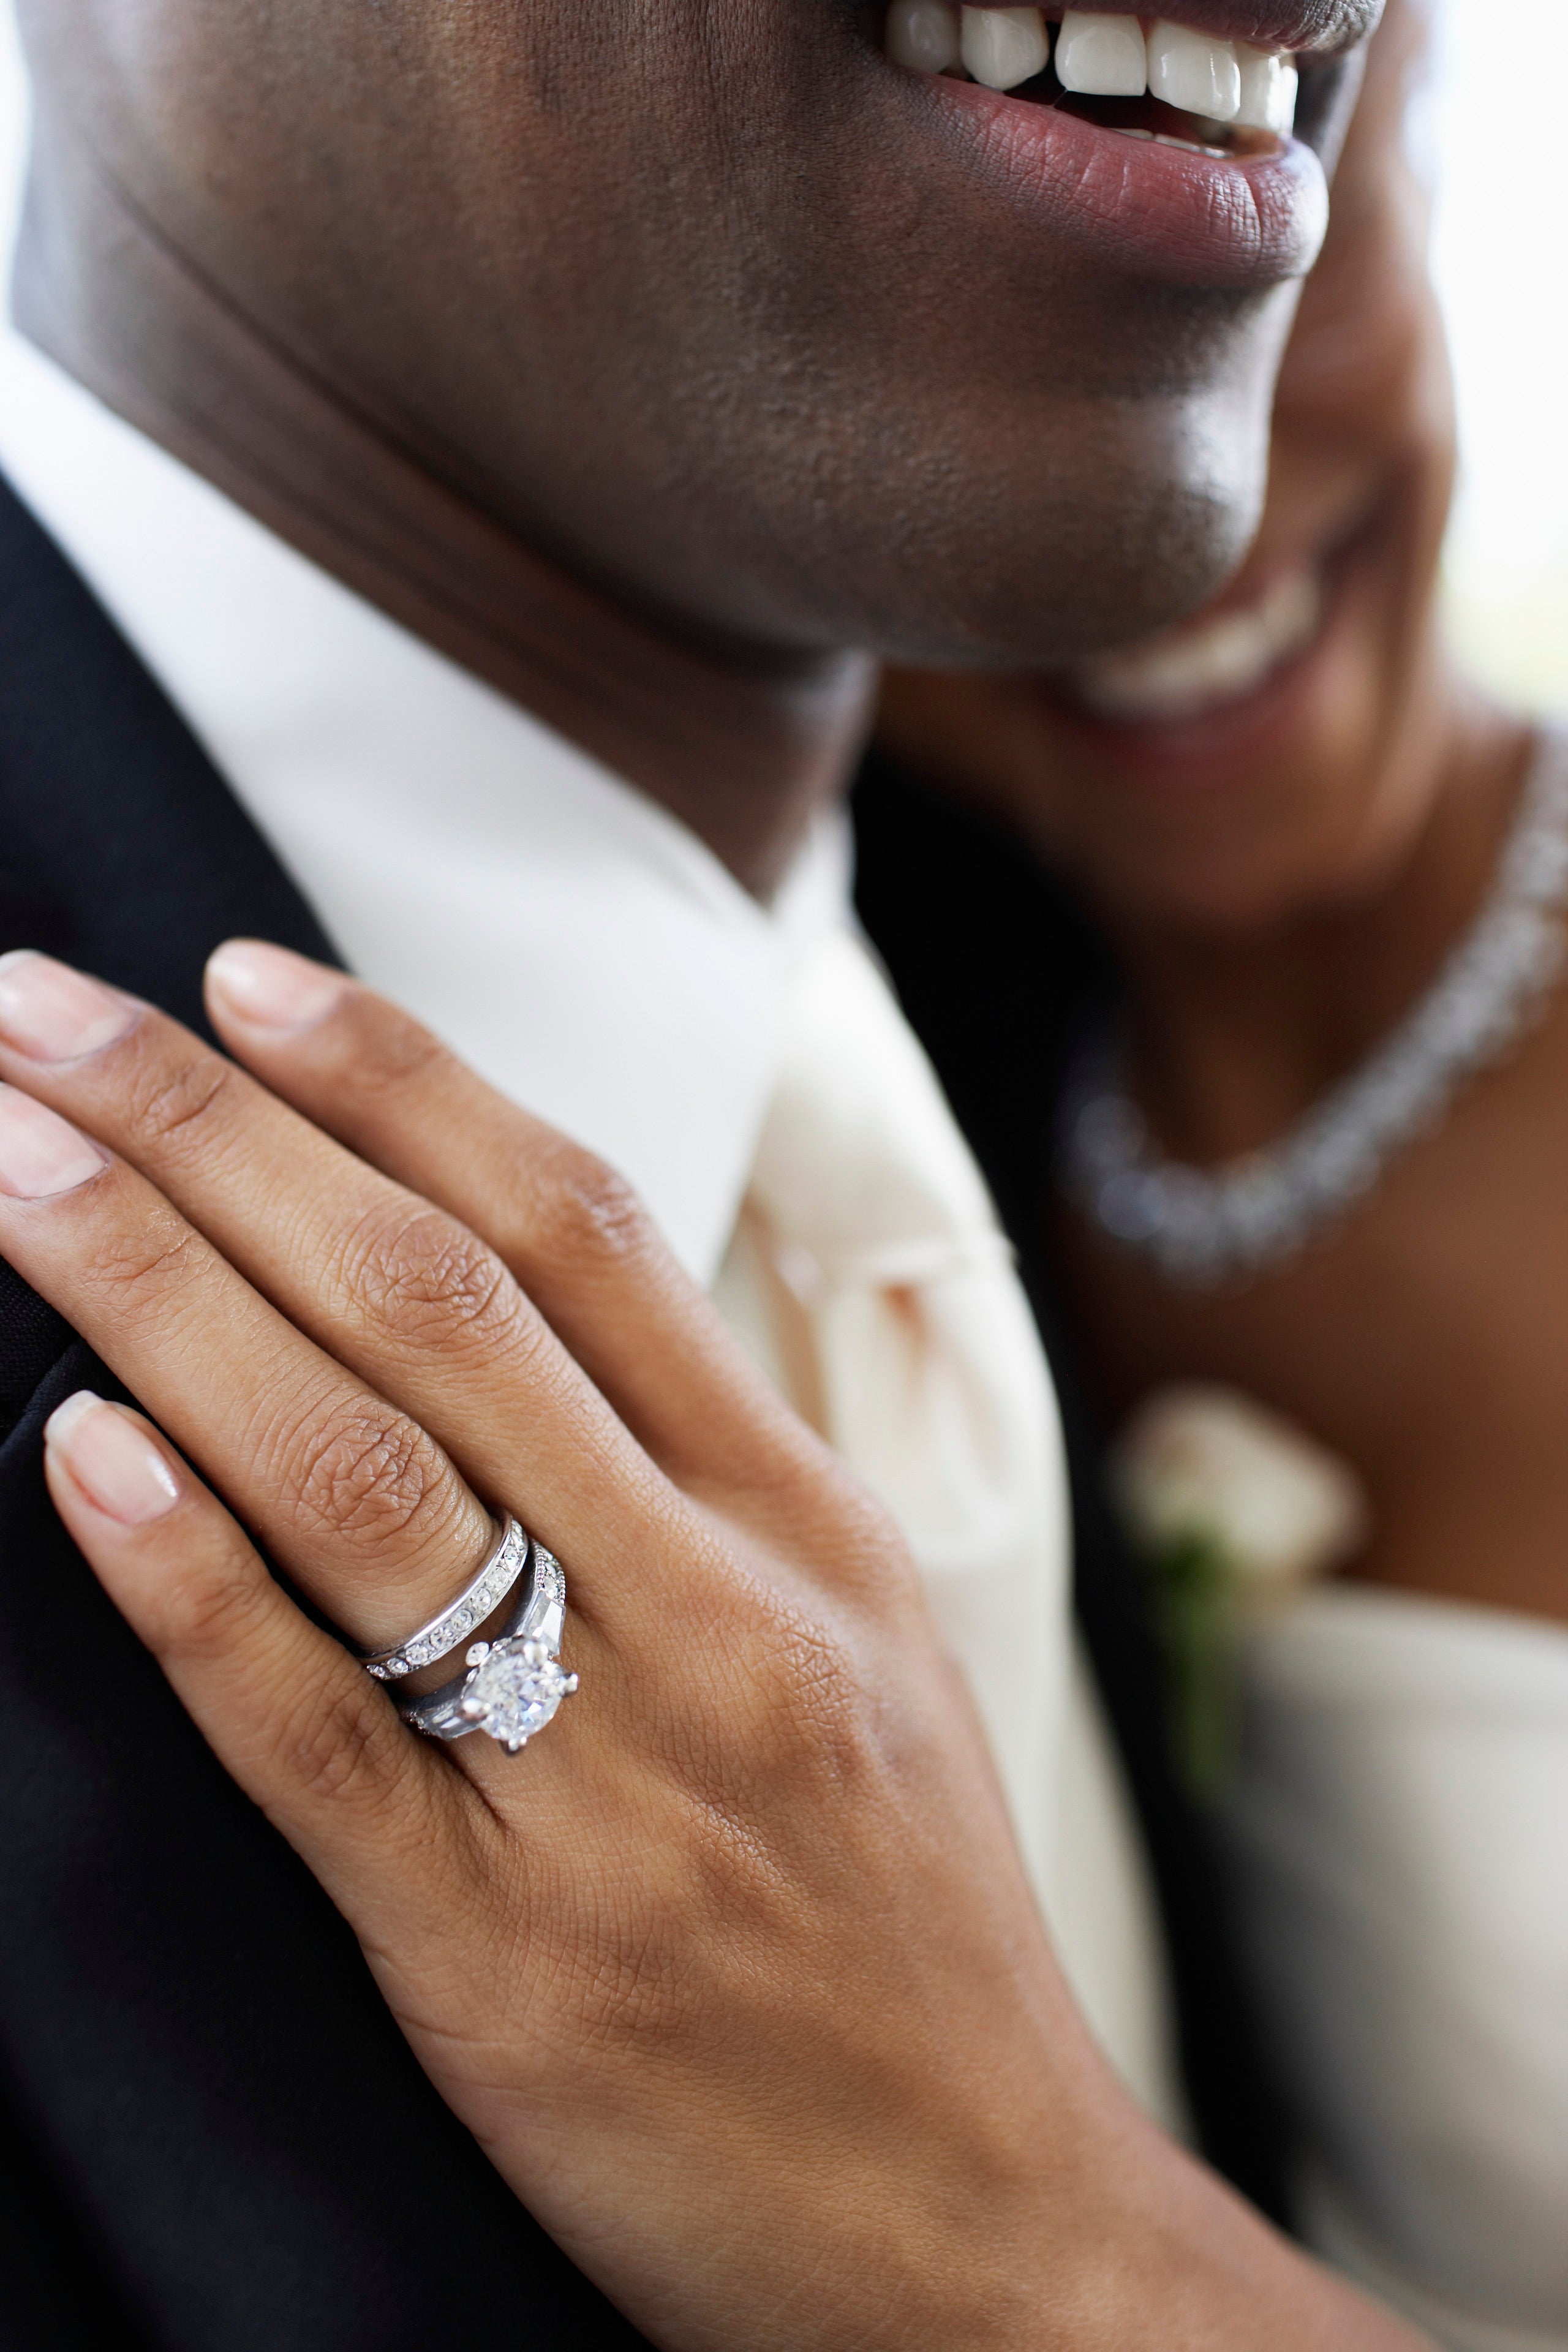 Mississippi Church Apologizes for Banning Black Wedding